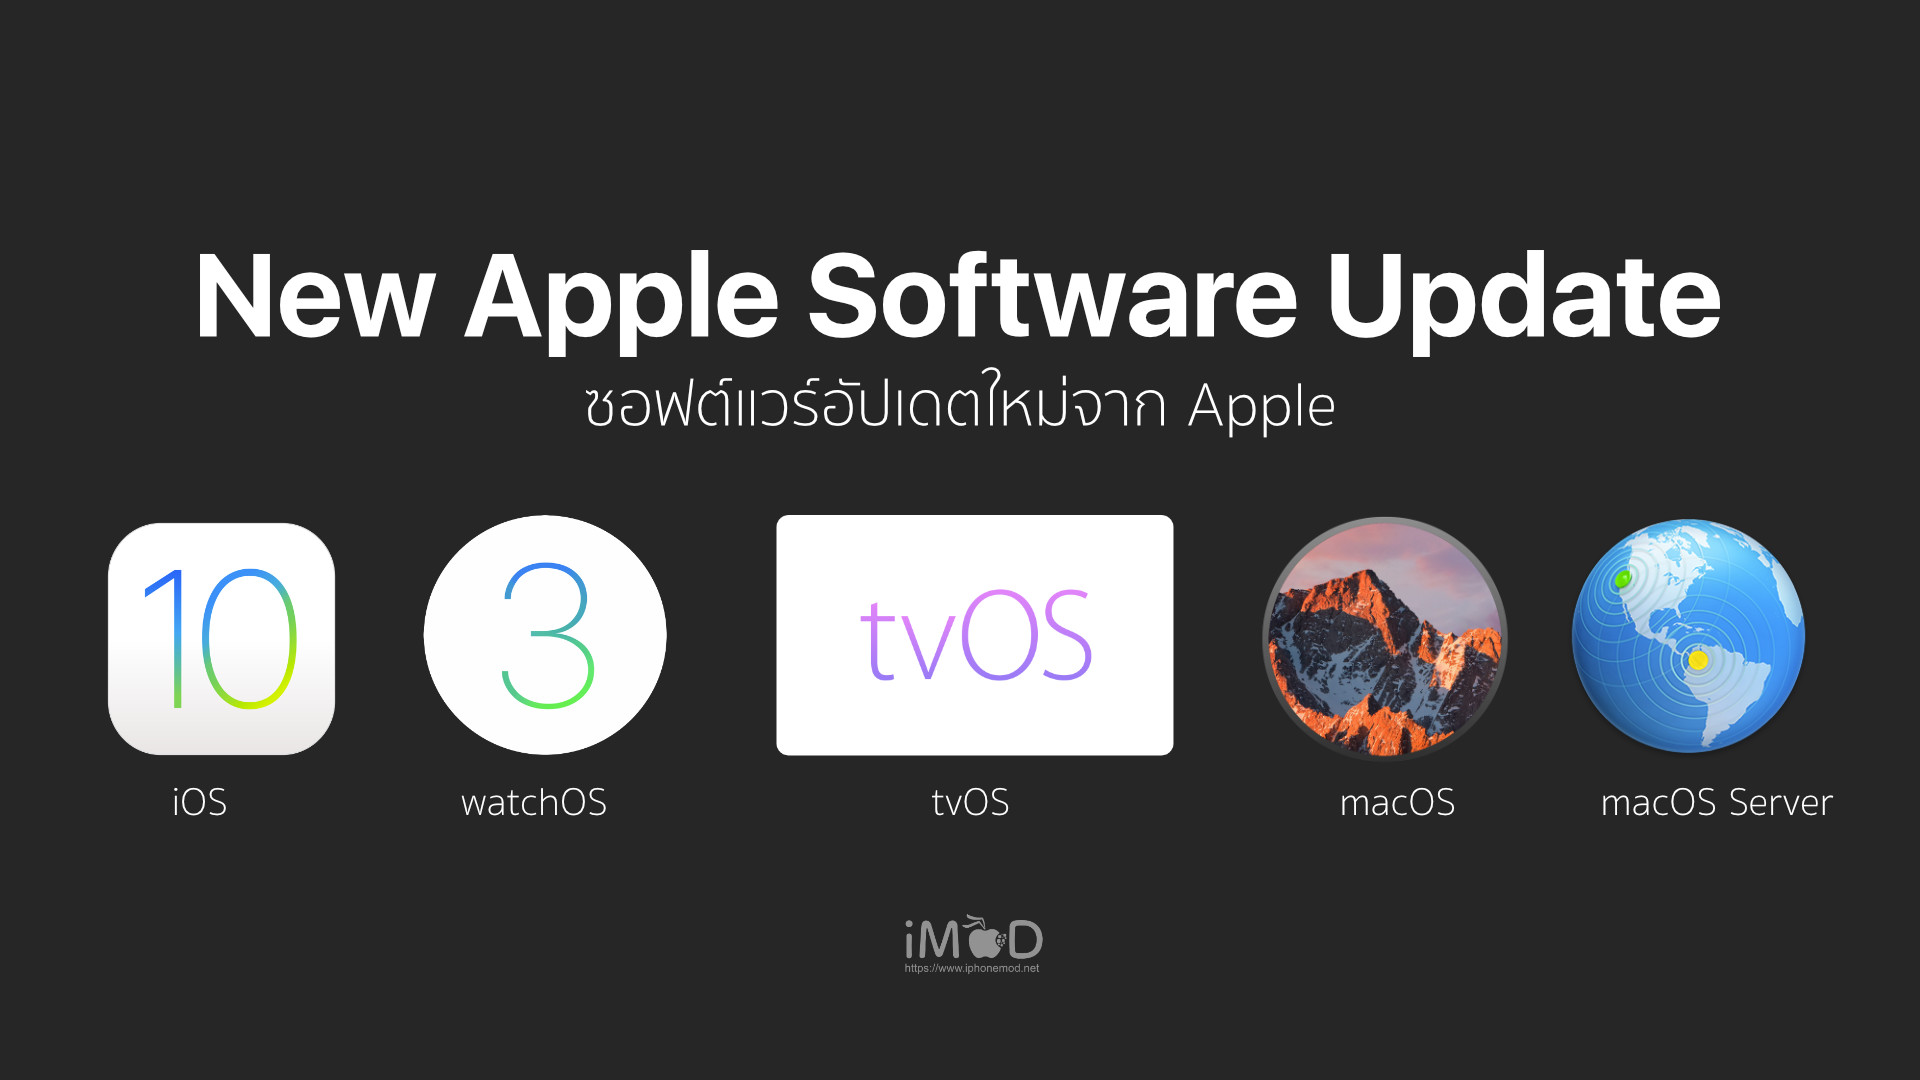 new mac software update called